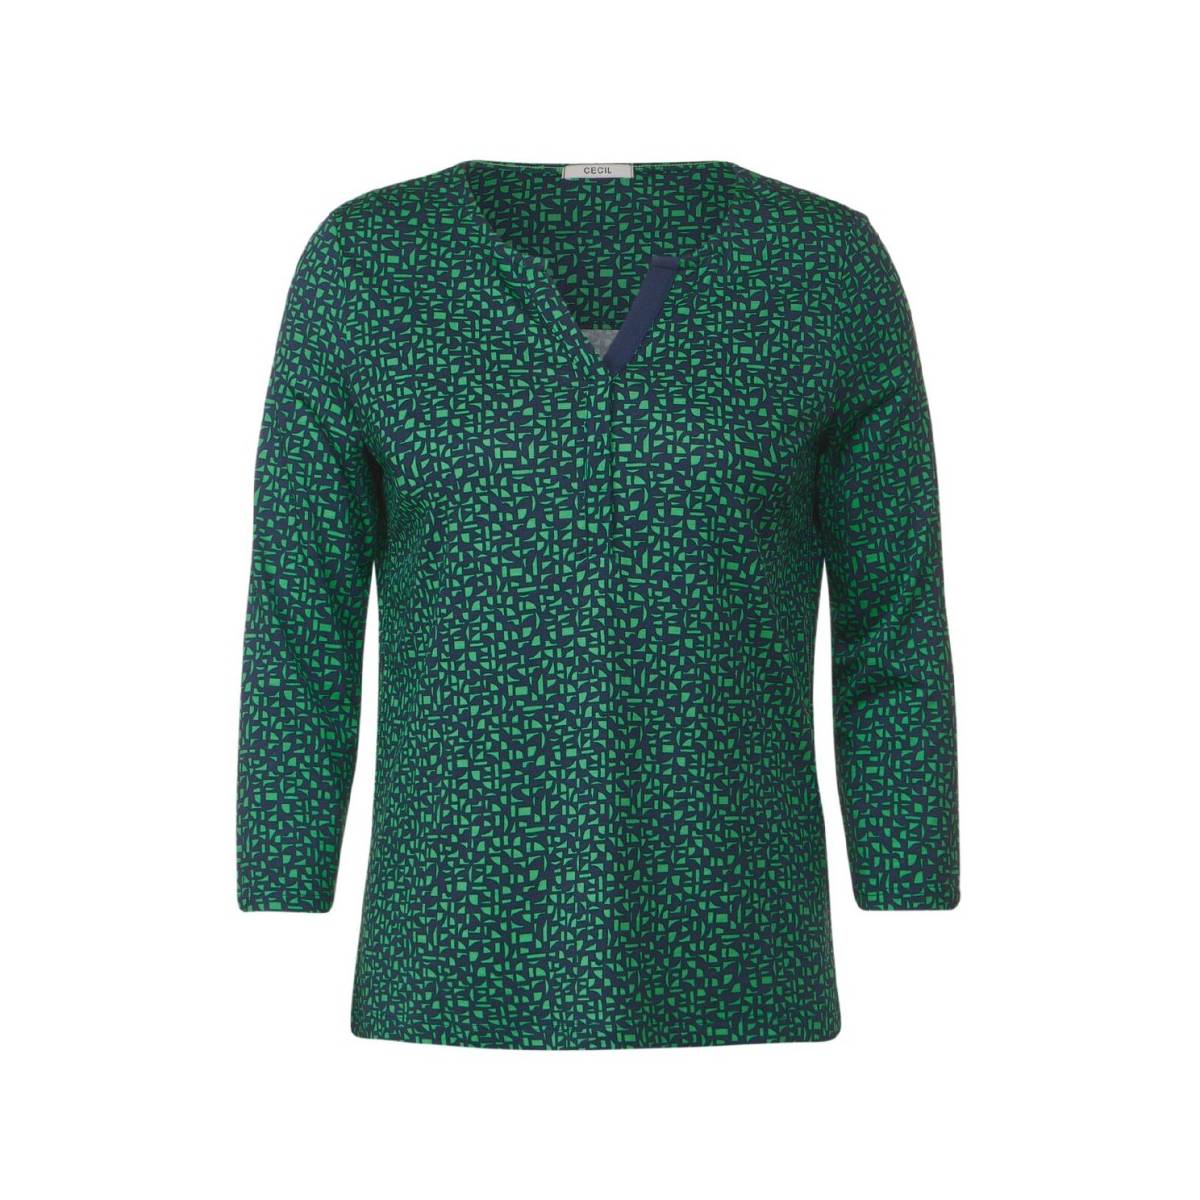 CECIL  t shirts groen/color -  model b320875 - Dameskleding t shirts groen